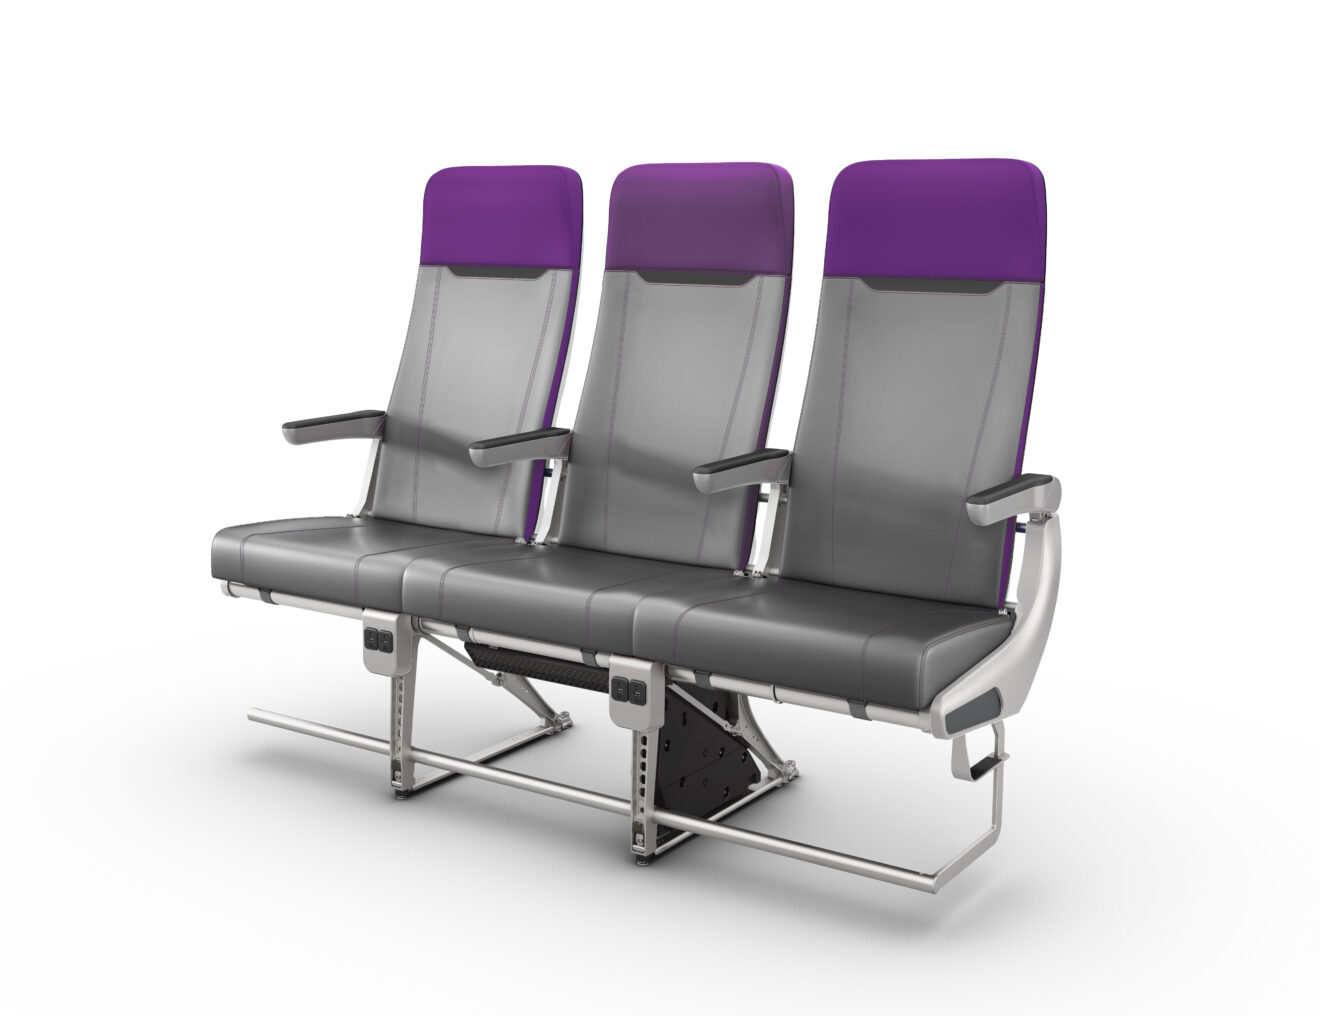 Recaro's SL3710 seats to take flight on HK Express' A321neo